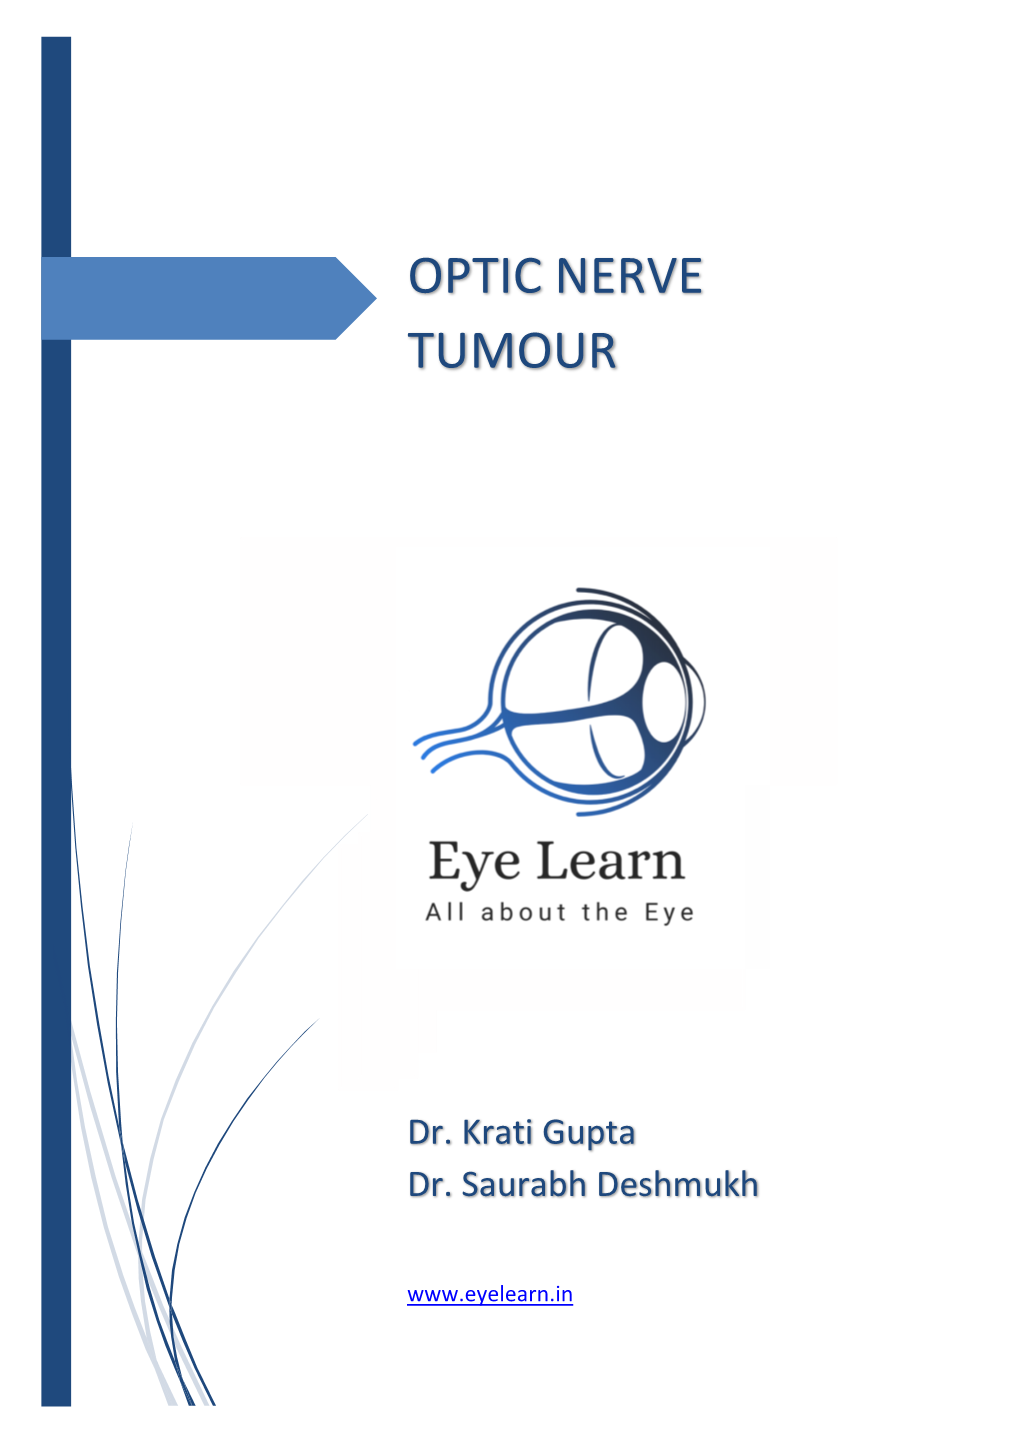 Optic Nerve Tumors, Second Only to Optic Nerve Glioma